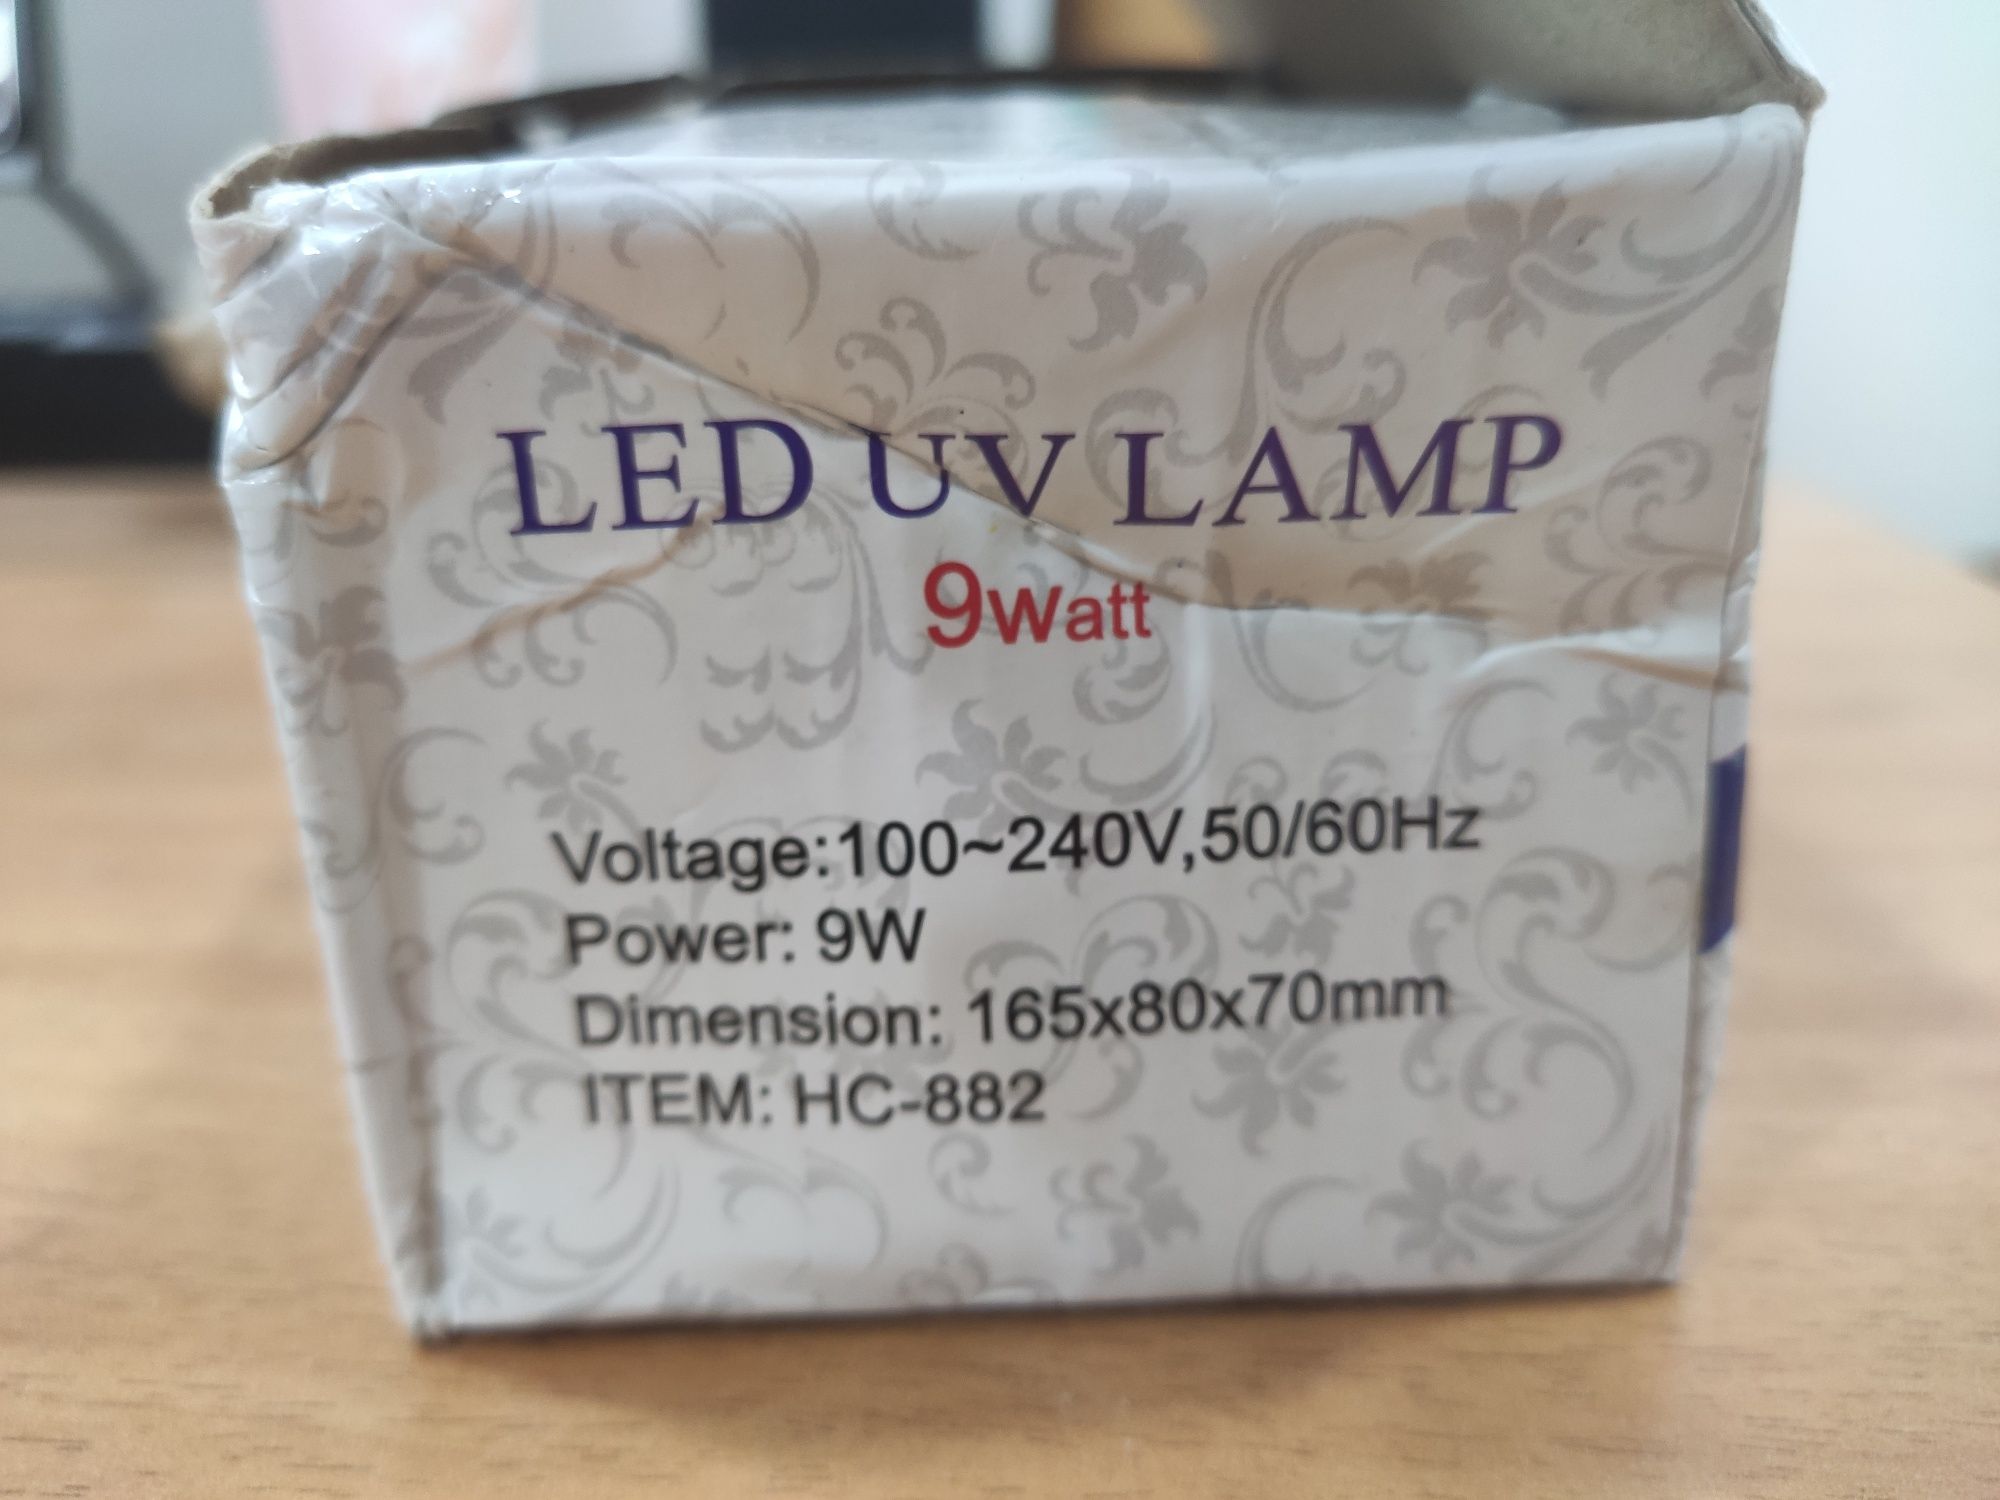 Led UV лампа для сушки гель лака, новая + массажёр в подарок